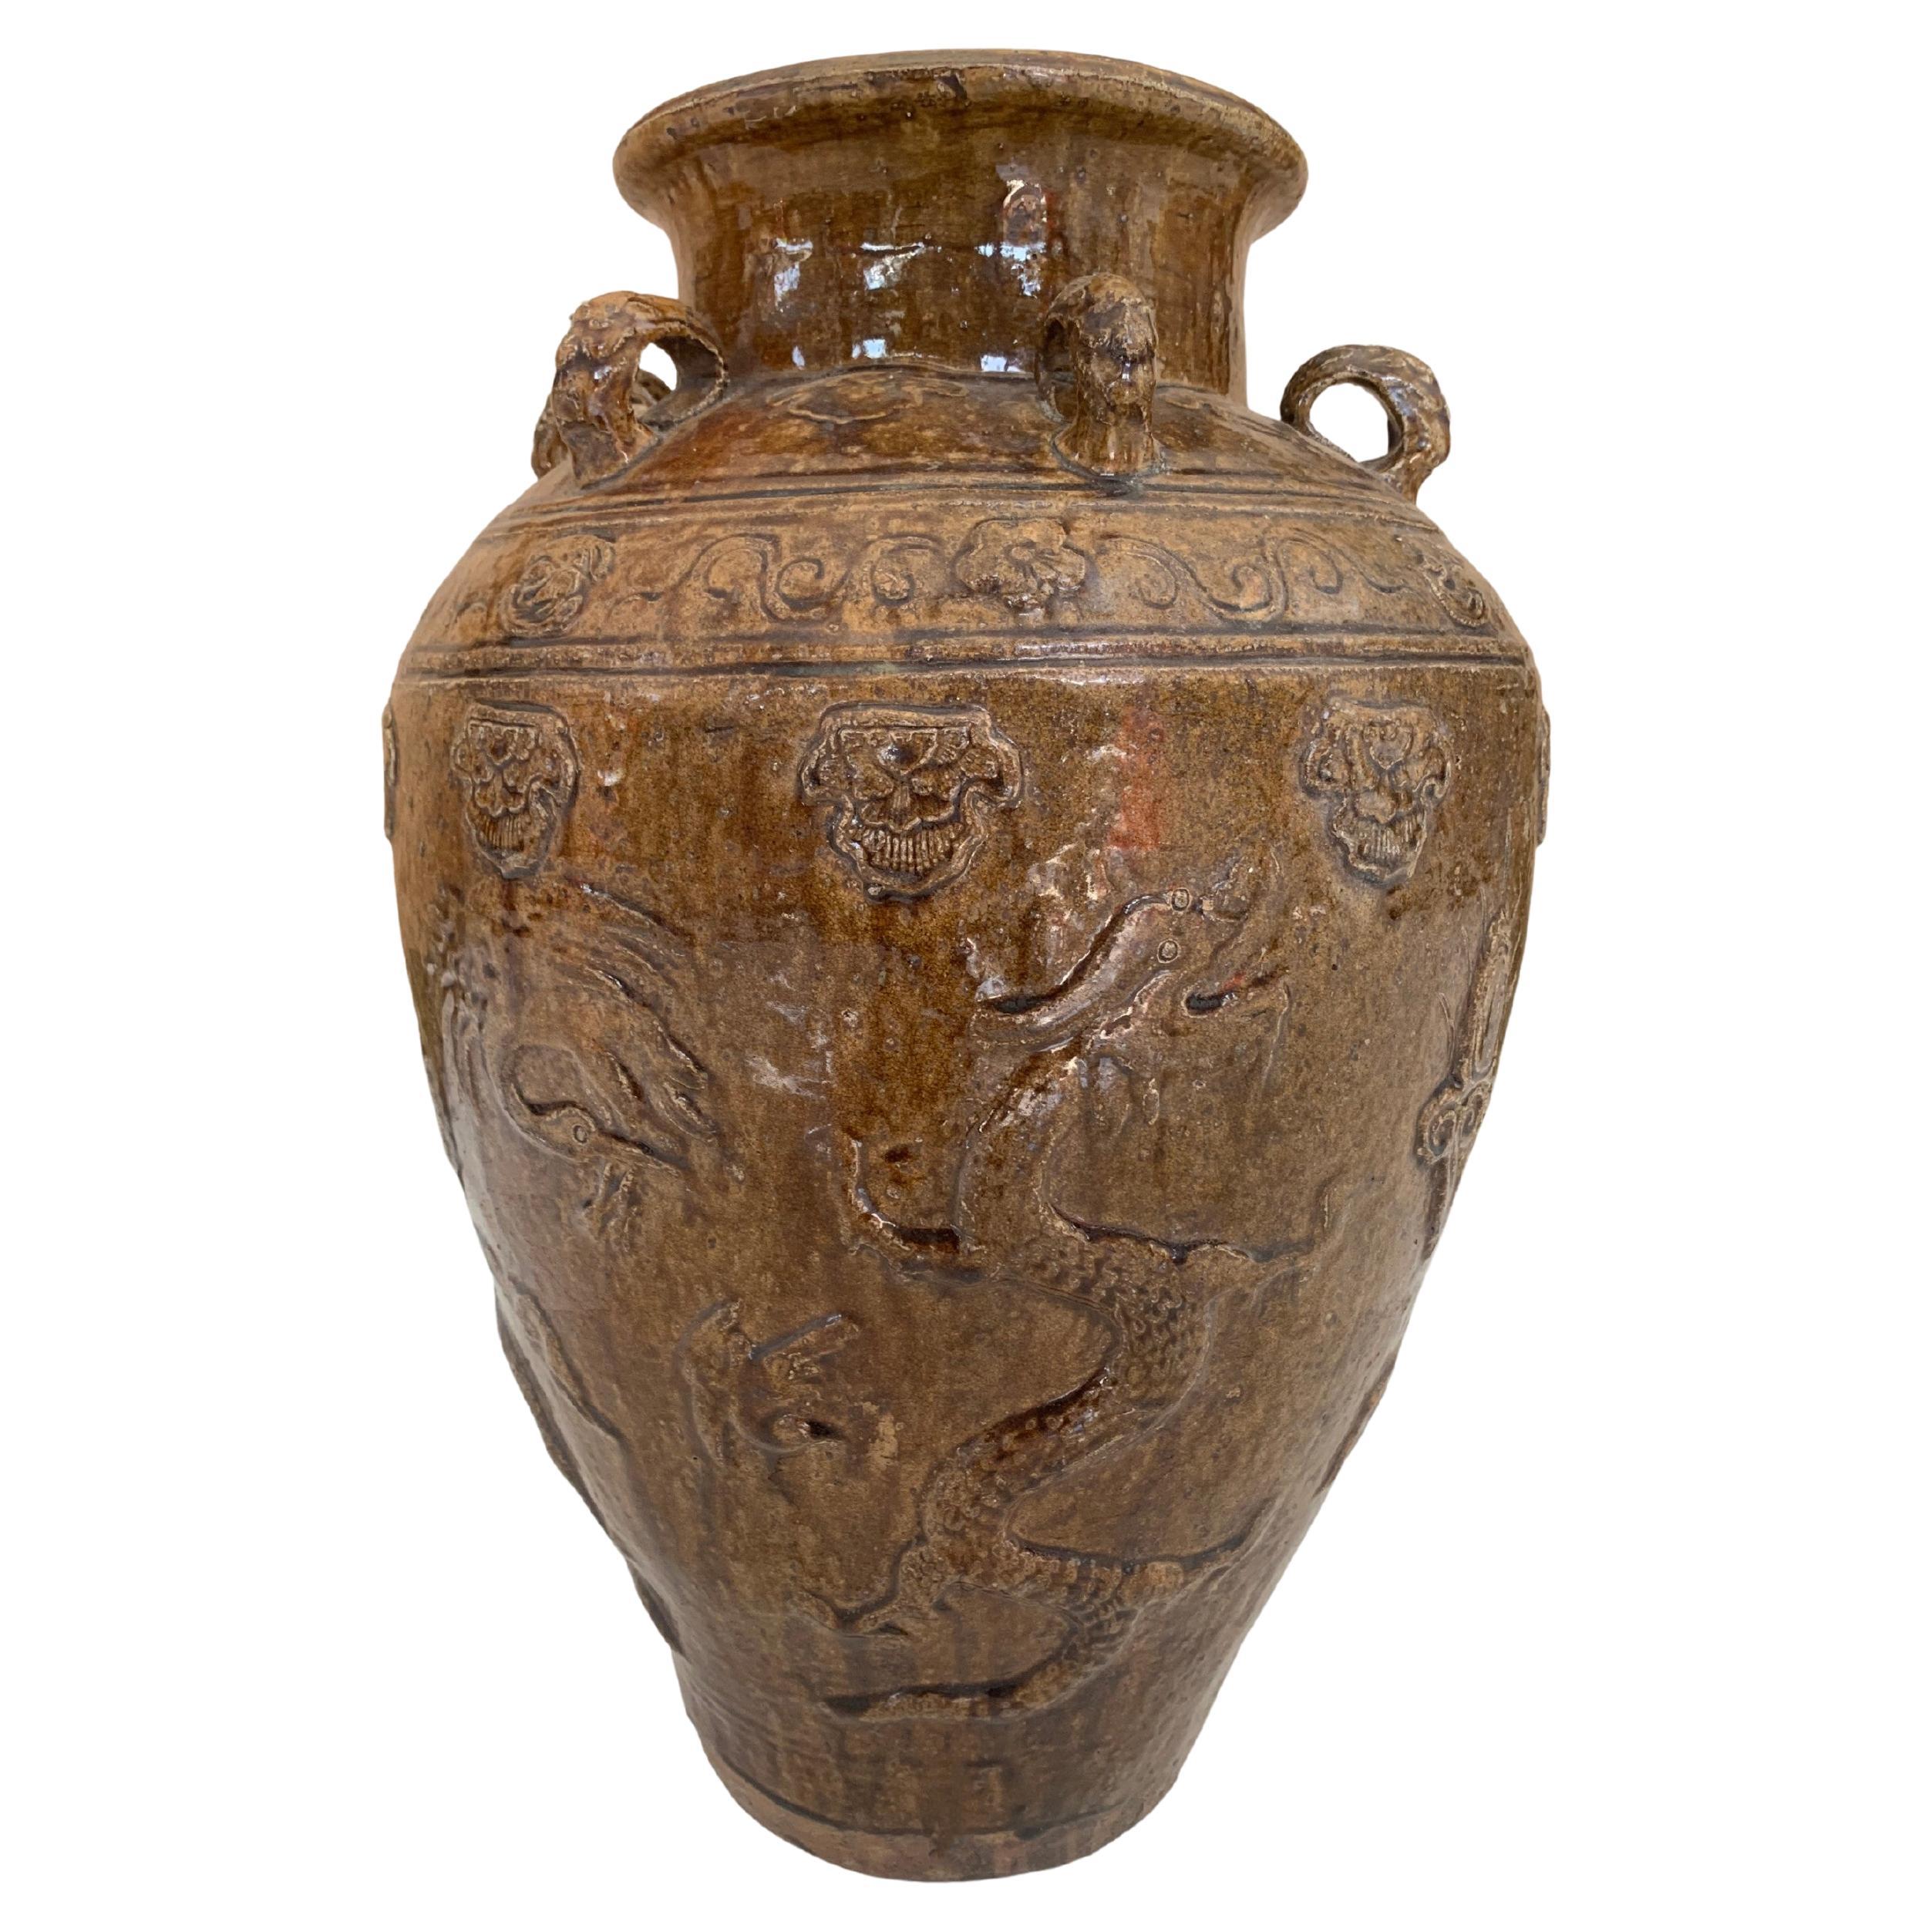 Chinese Ceramic "Martaban" Jar with Dragon Engravings & Tiger Medallions